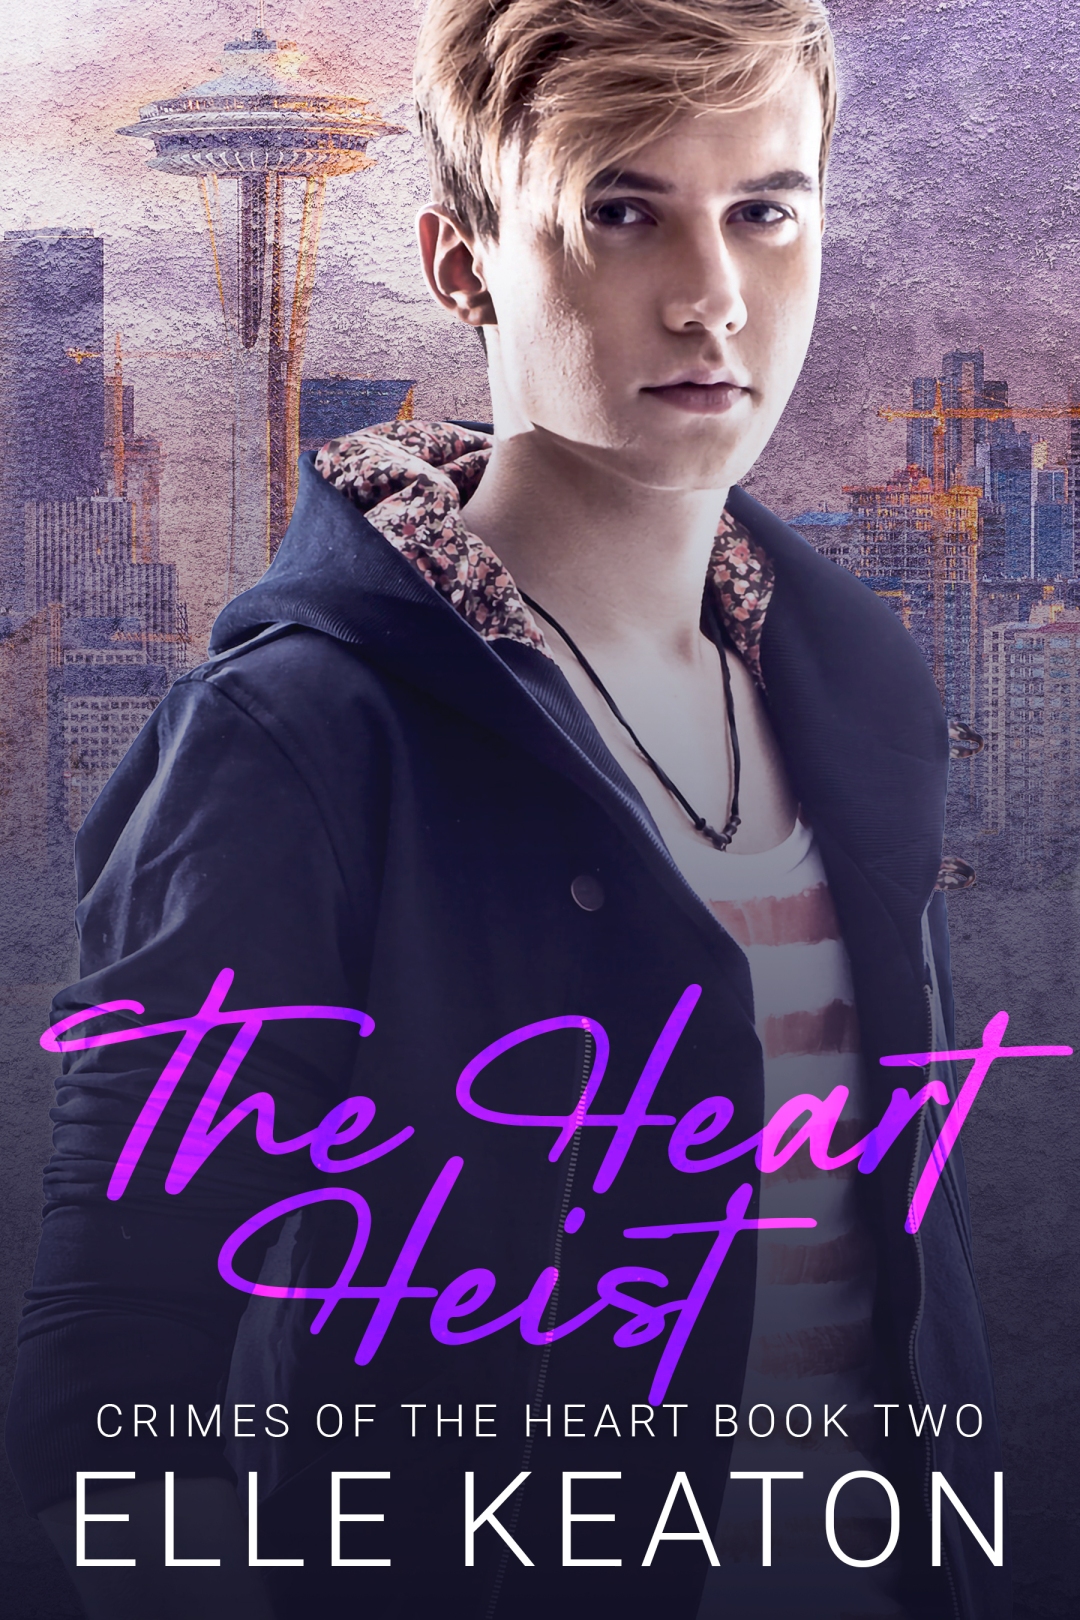 The Heart Heist Ebook